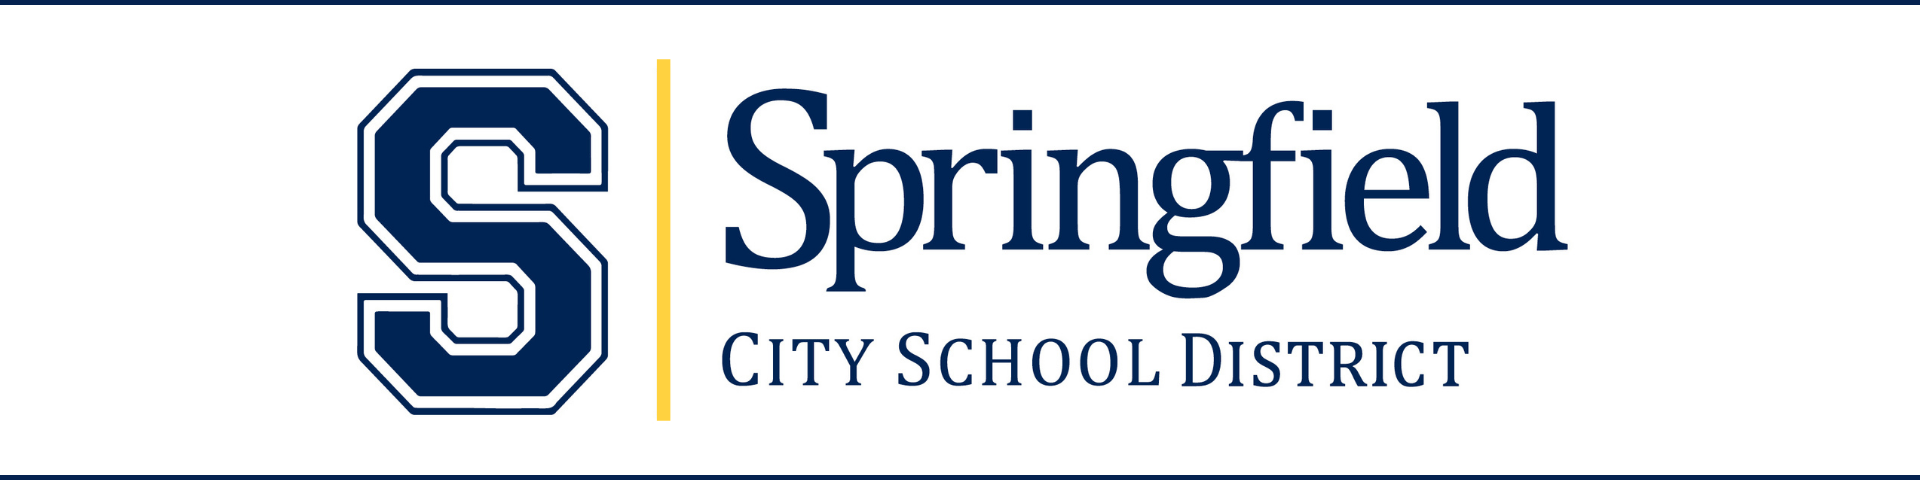 Springfield City School District Logo